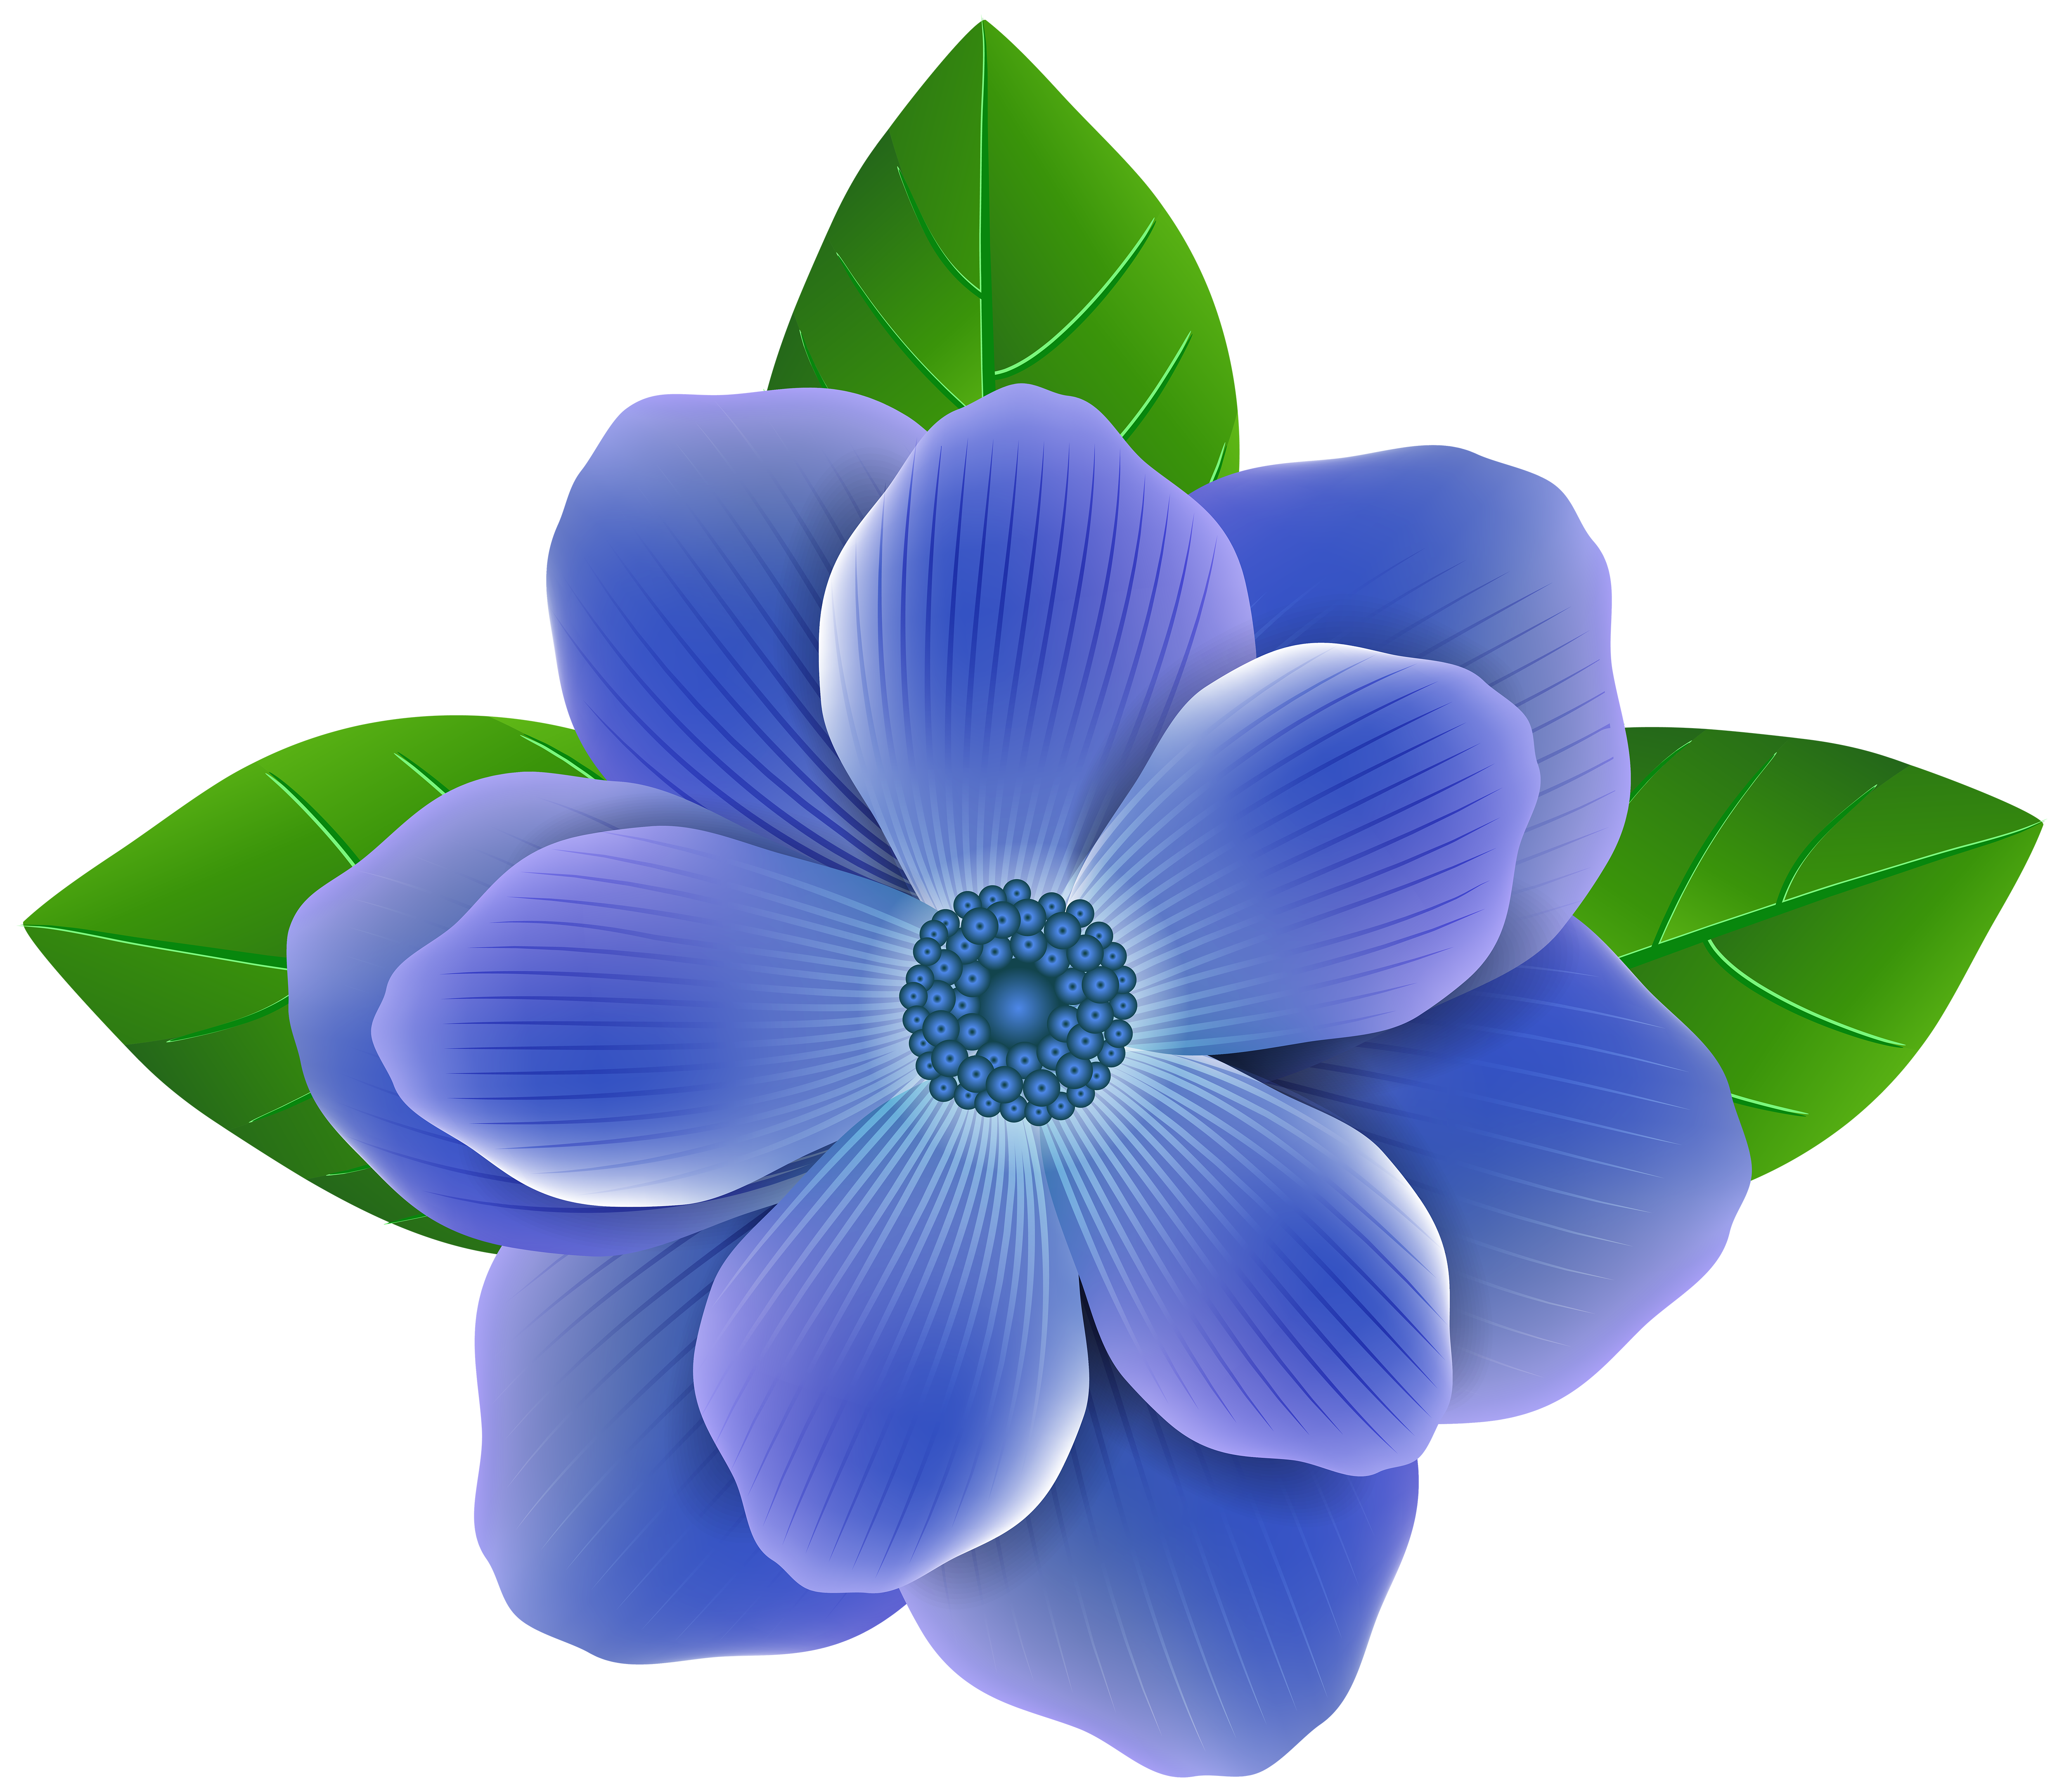 Blue Flower PNG Clip Art Image